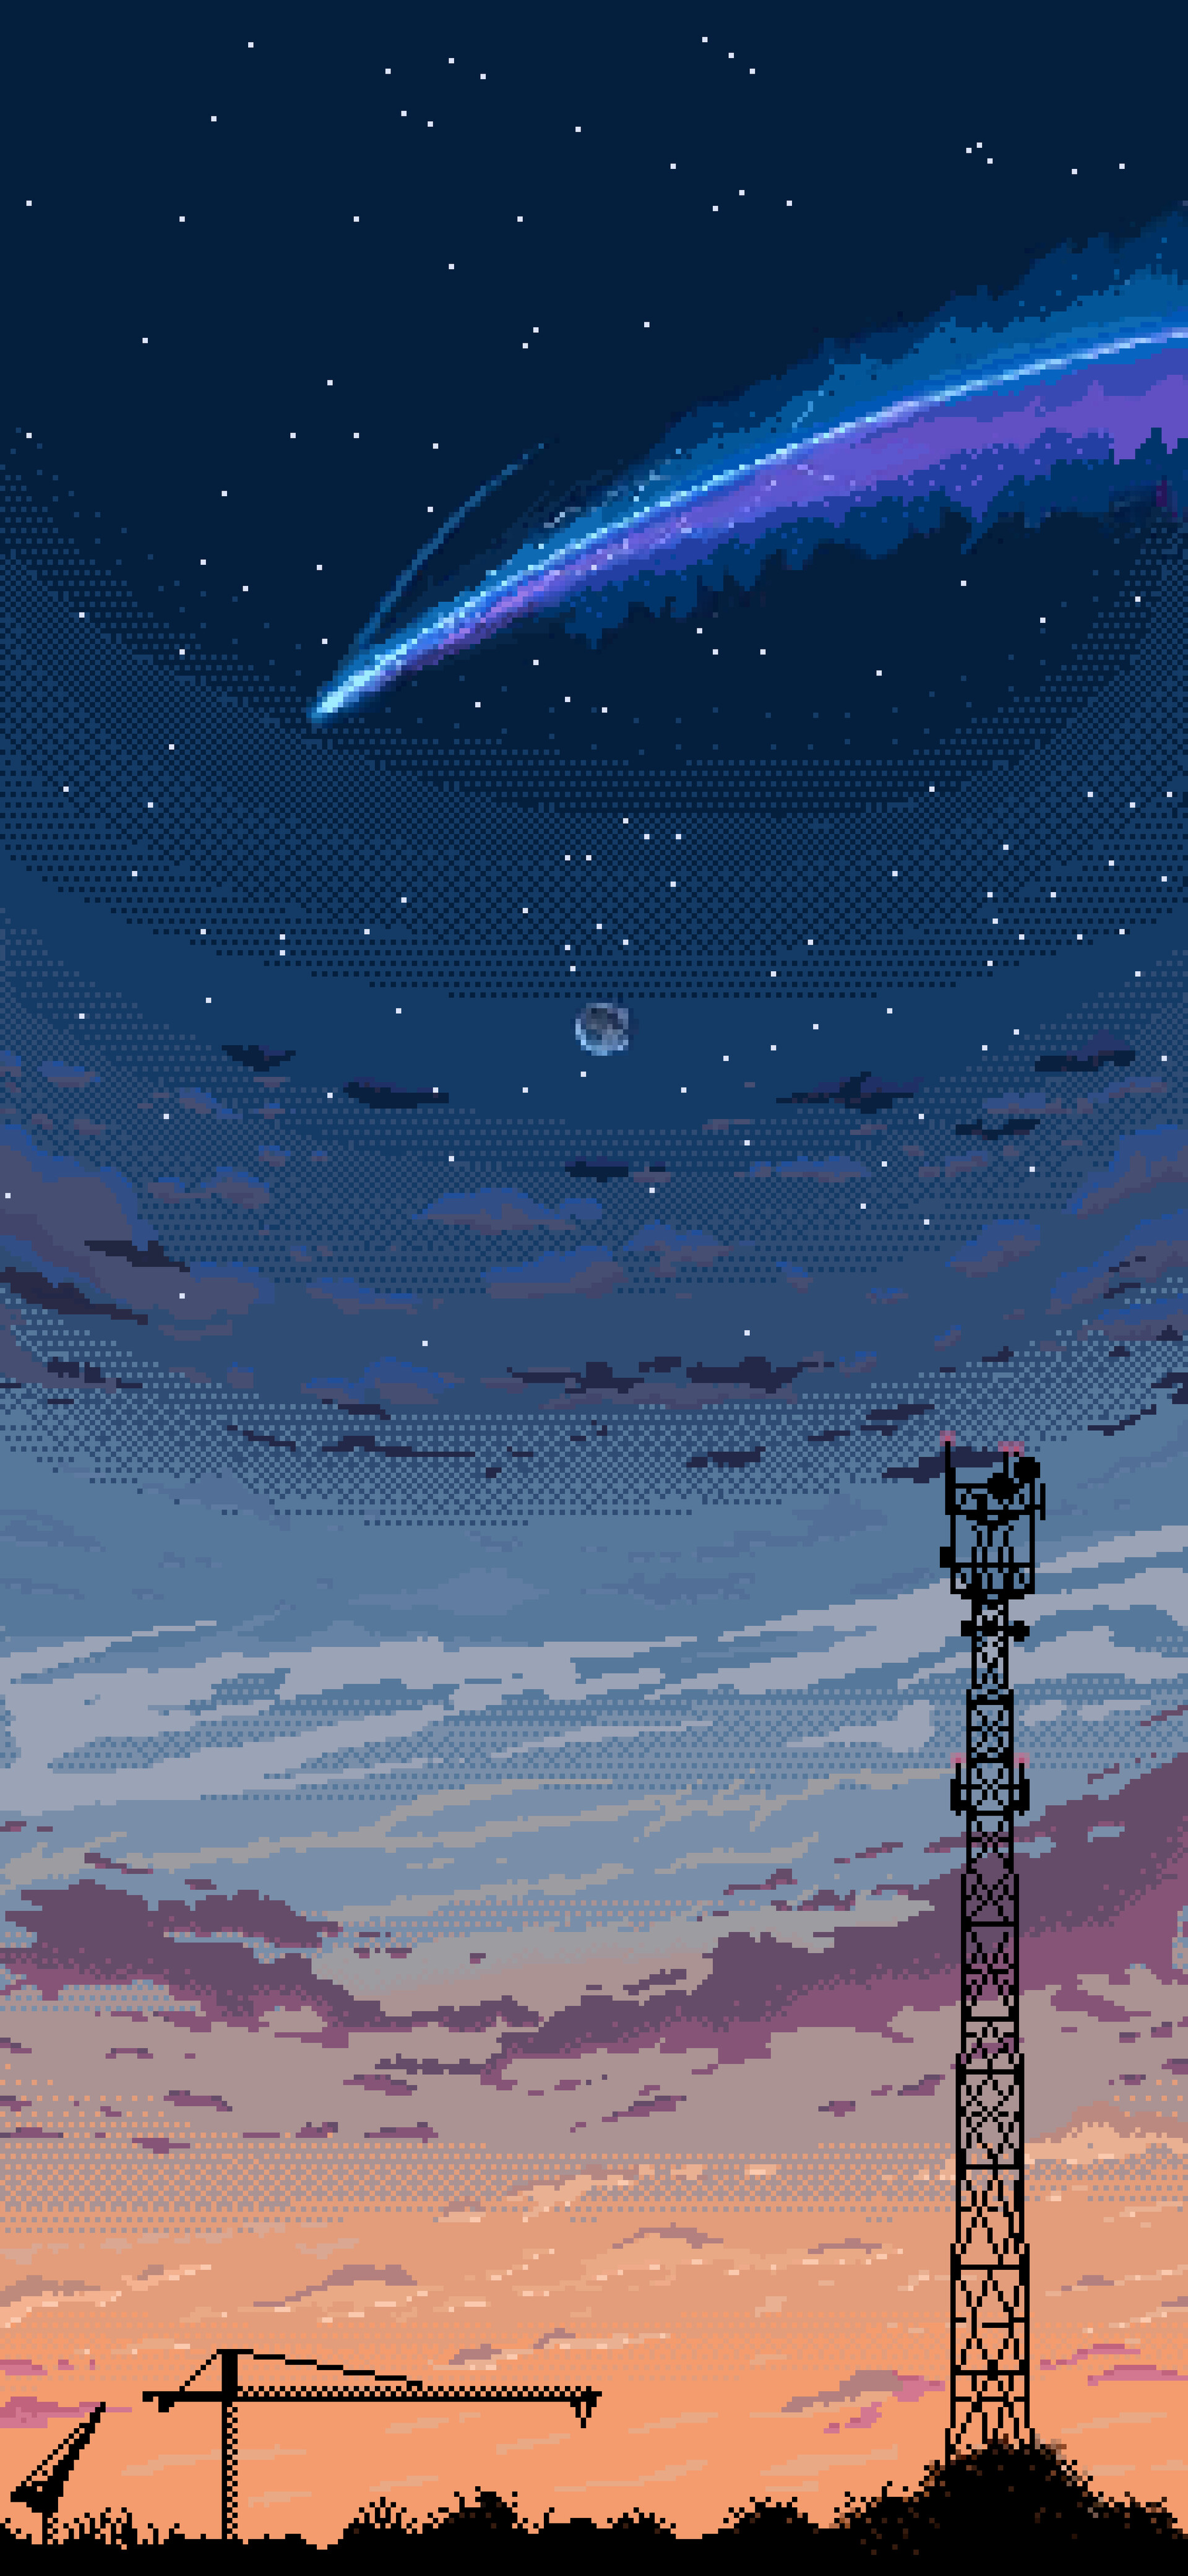 ArtStation - Sunset landscape Pixel Art